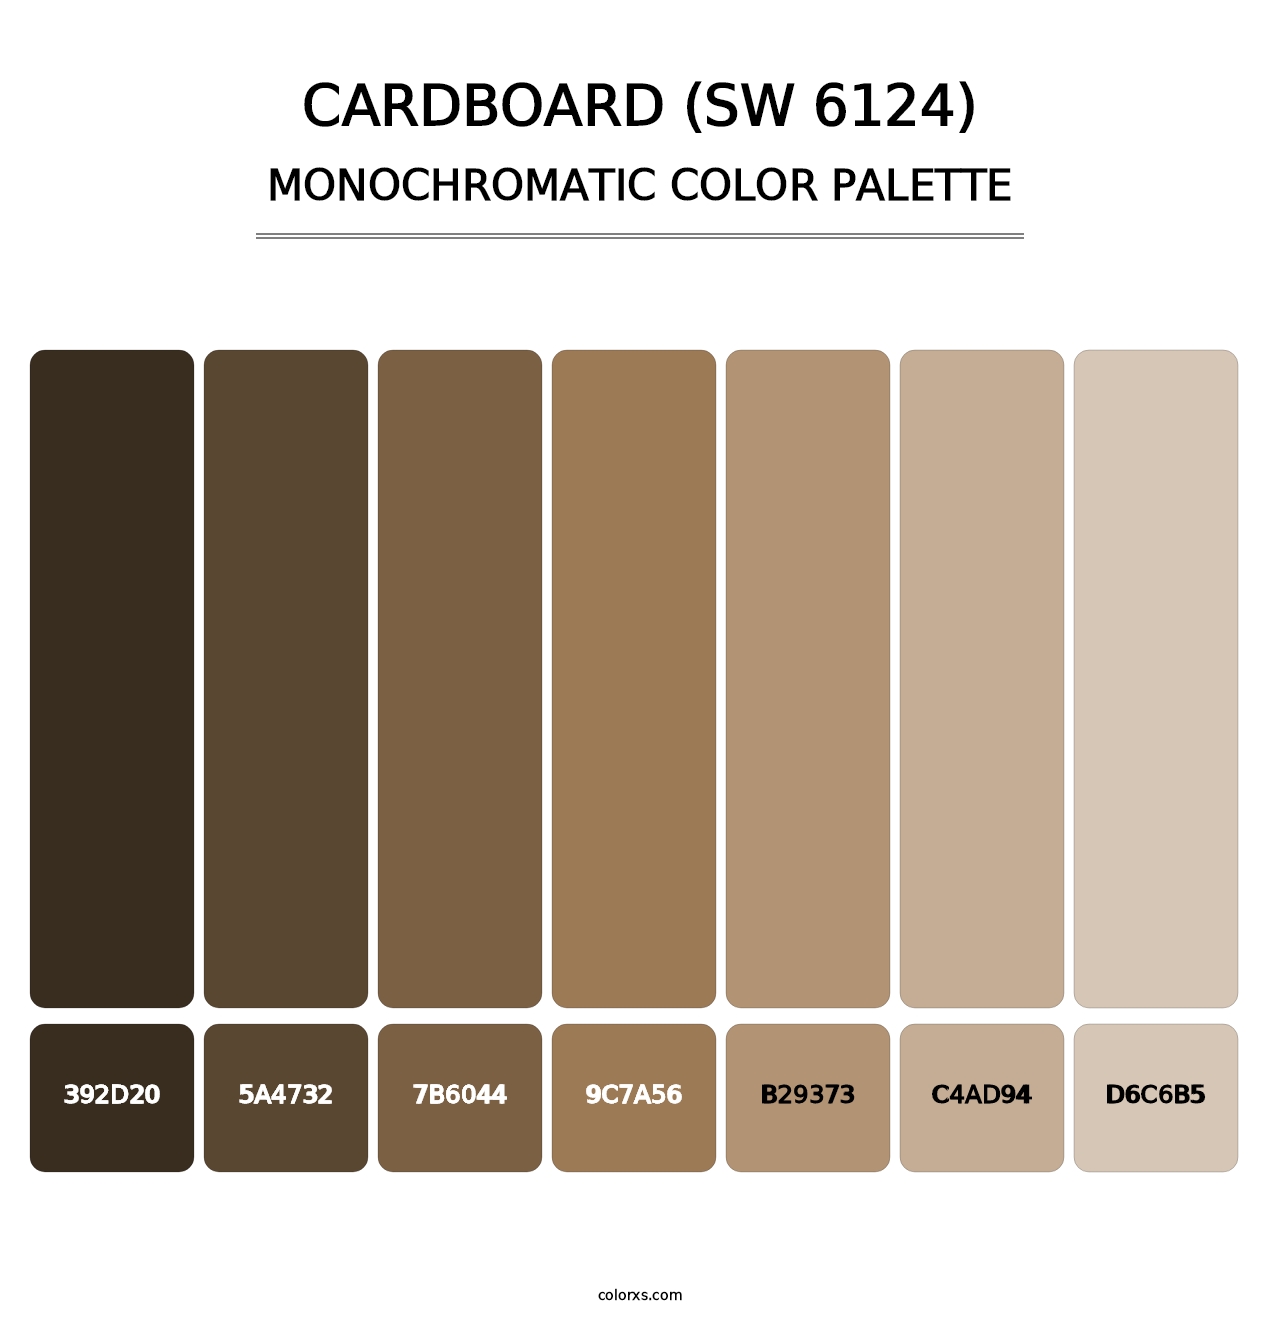 Cardboard (SW 6124) - Monochromatic Color Palette